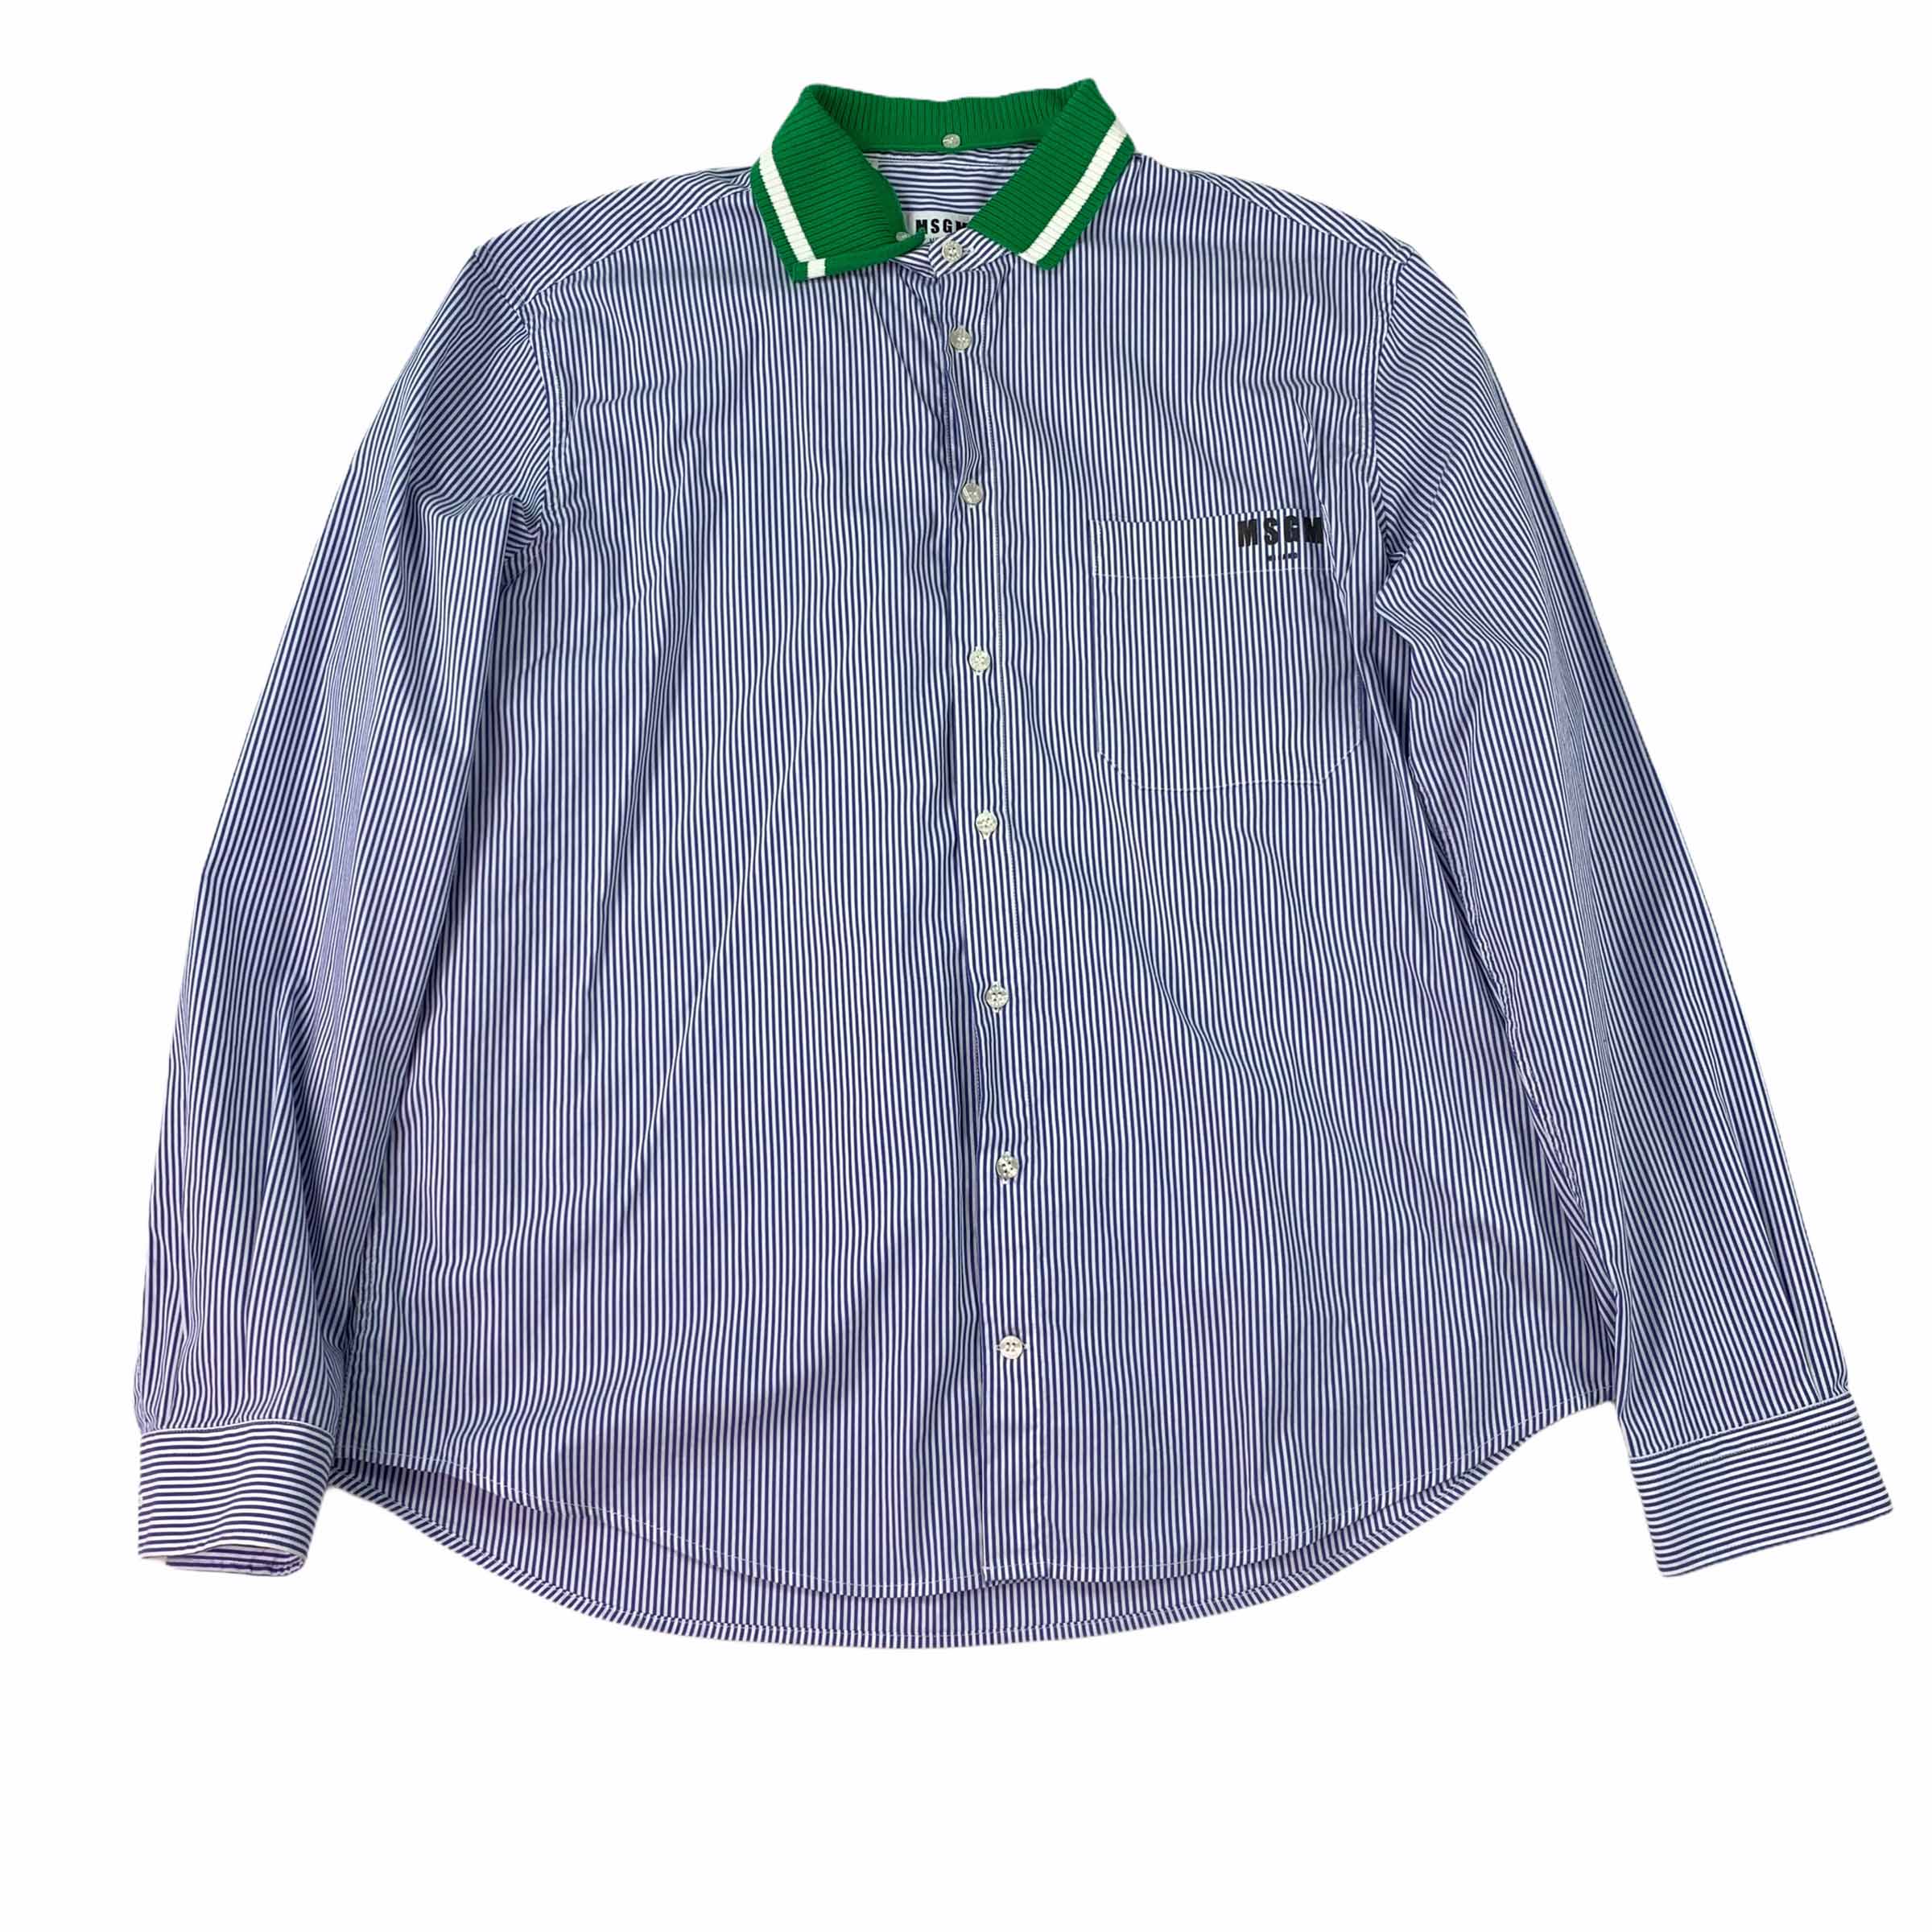 [MSGM] Neck Point Striped Shirt - Size 42